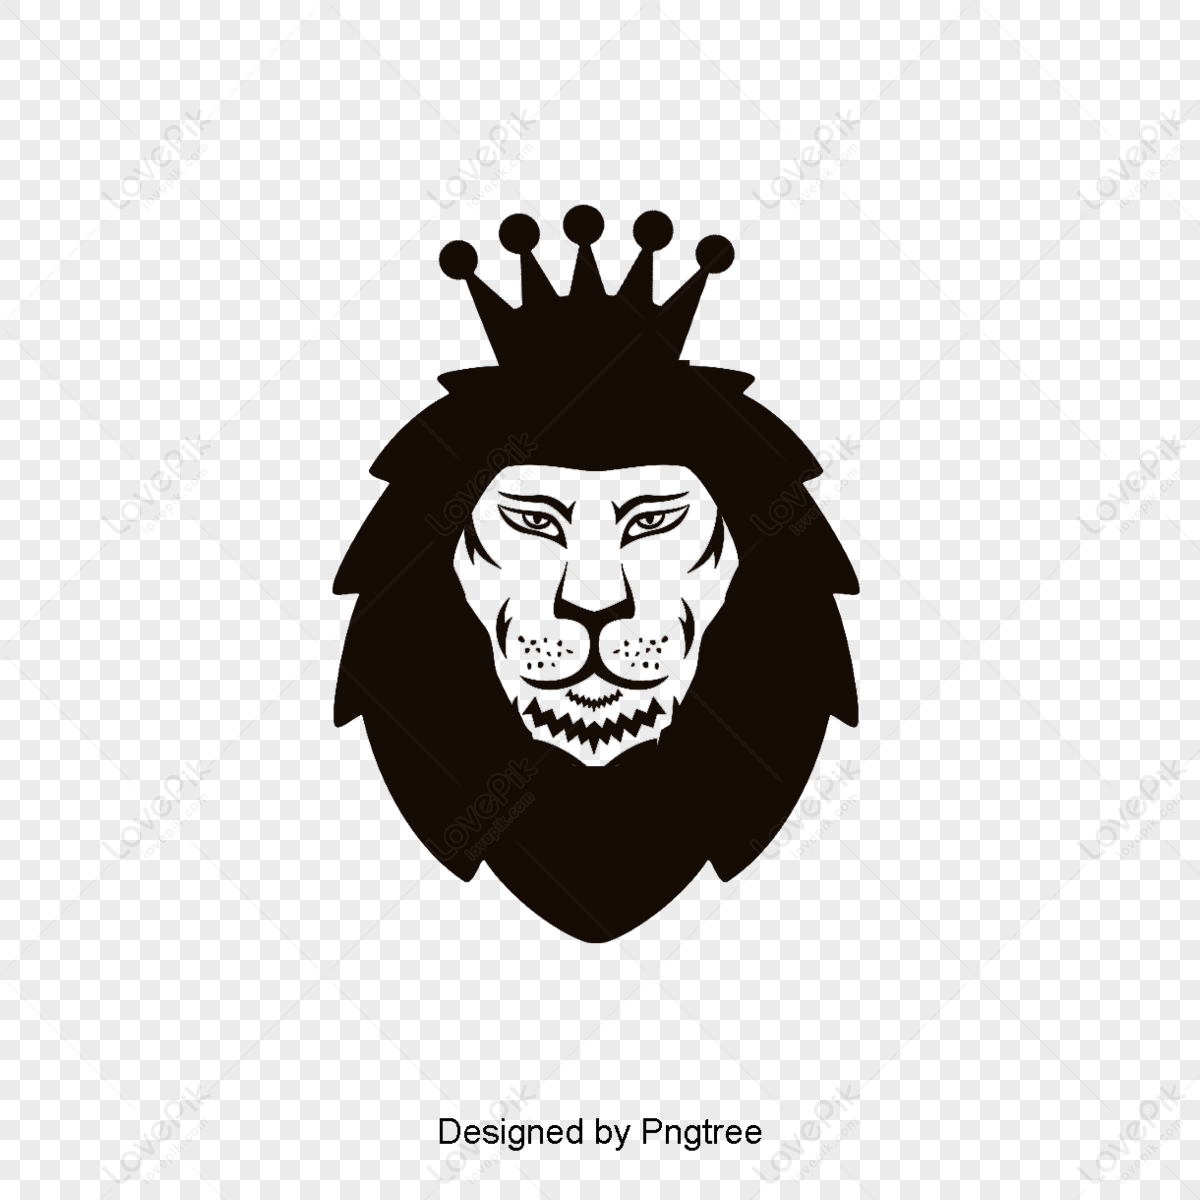 Lion Logo PNG Transparent Images Download - Free Transparent PNG Logos